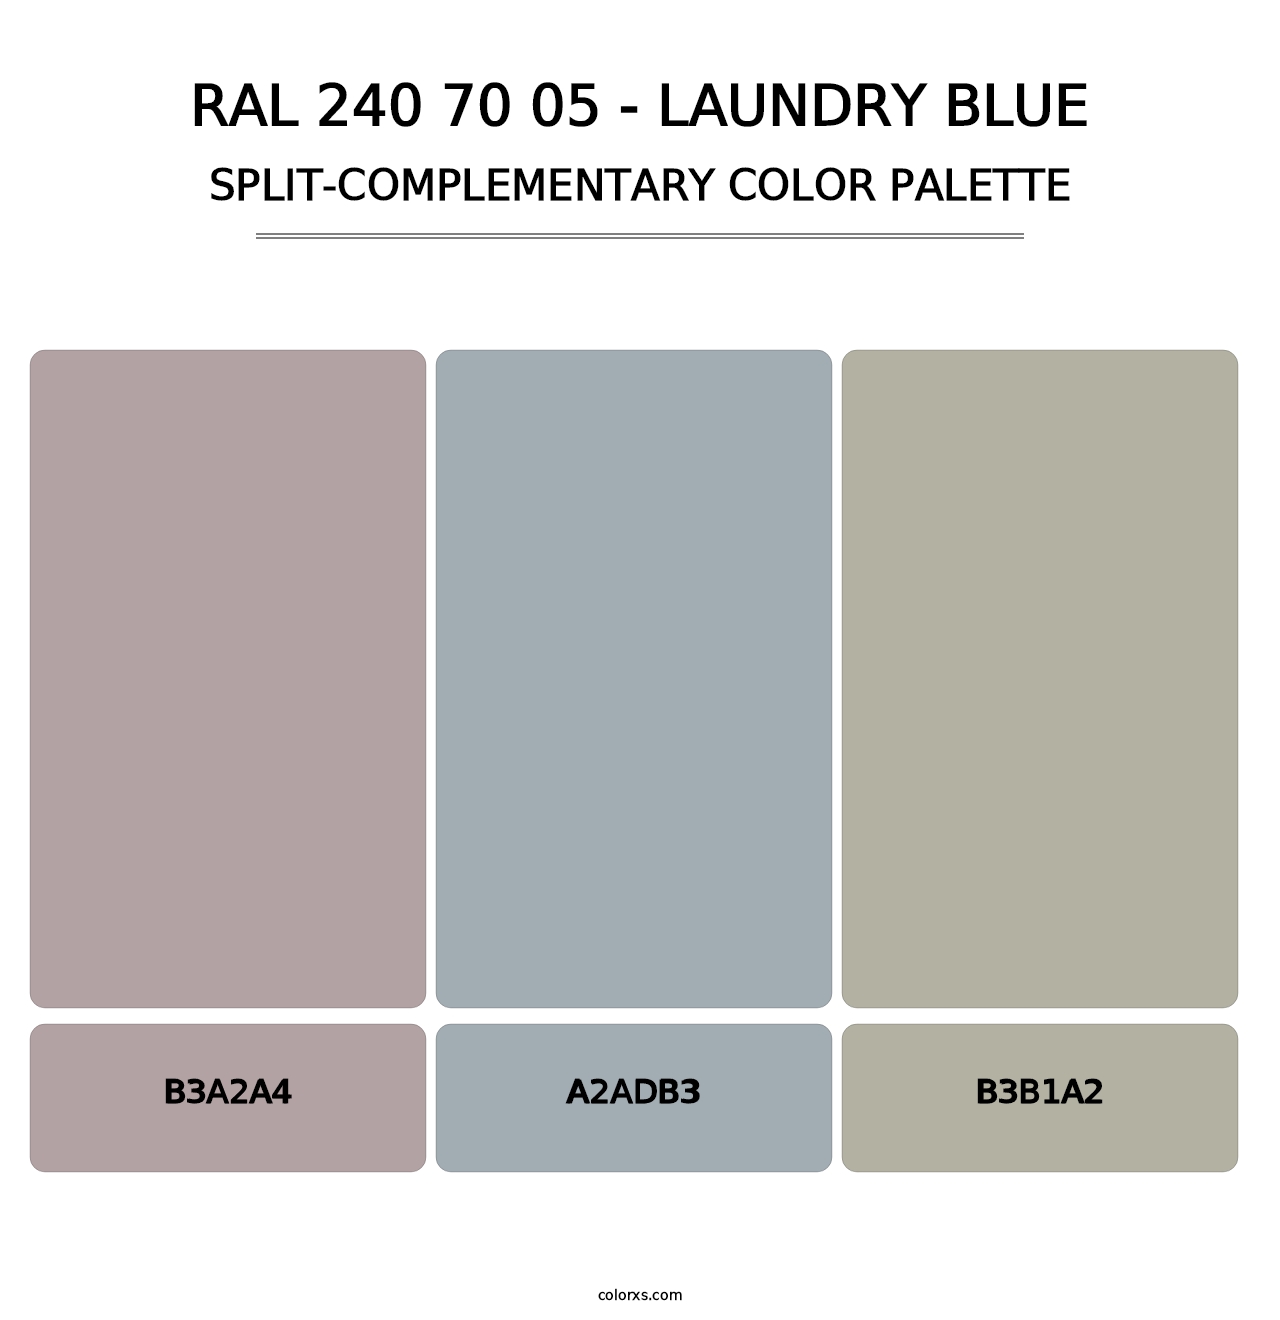 RAL 240 70 05 - Laundry Blue - Split-Complementary Color Palette